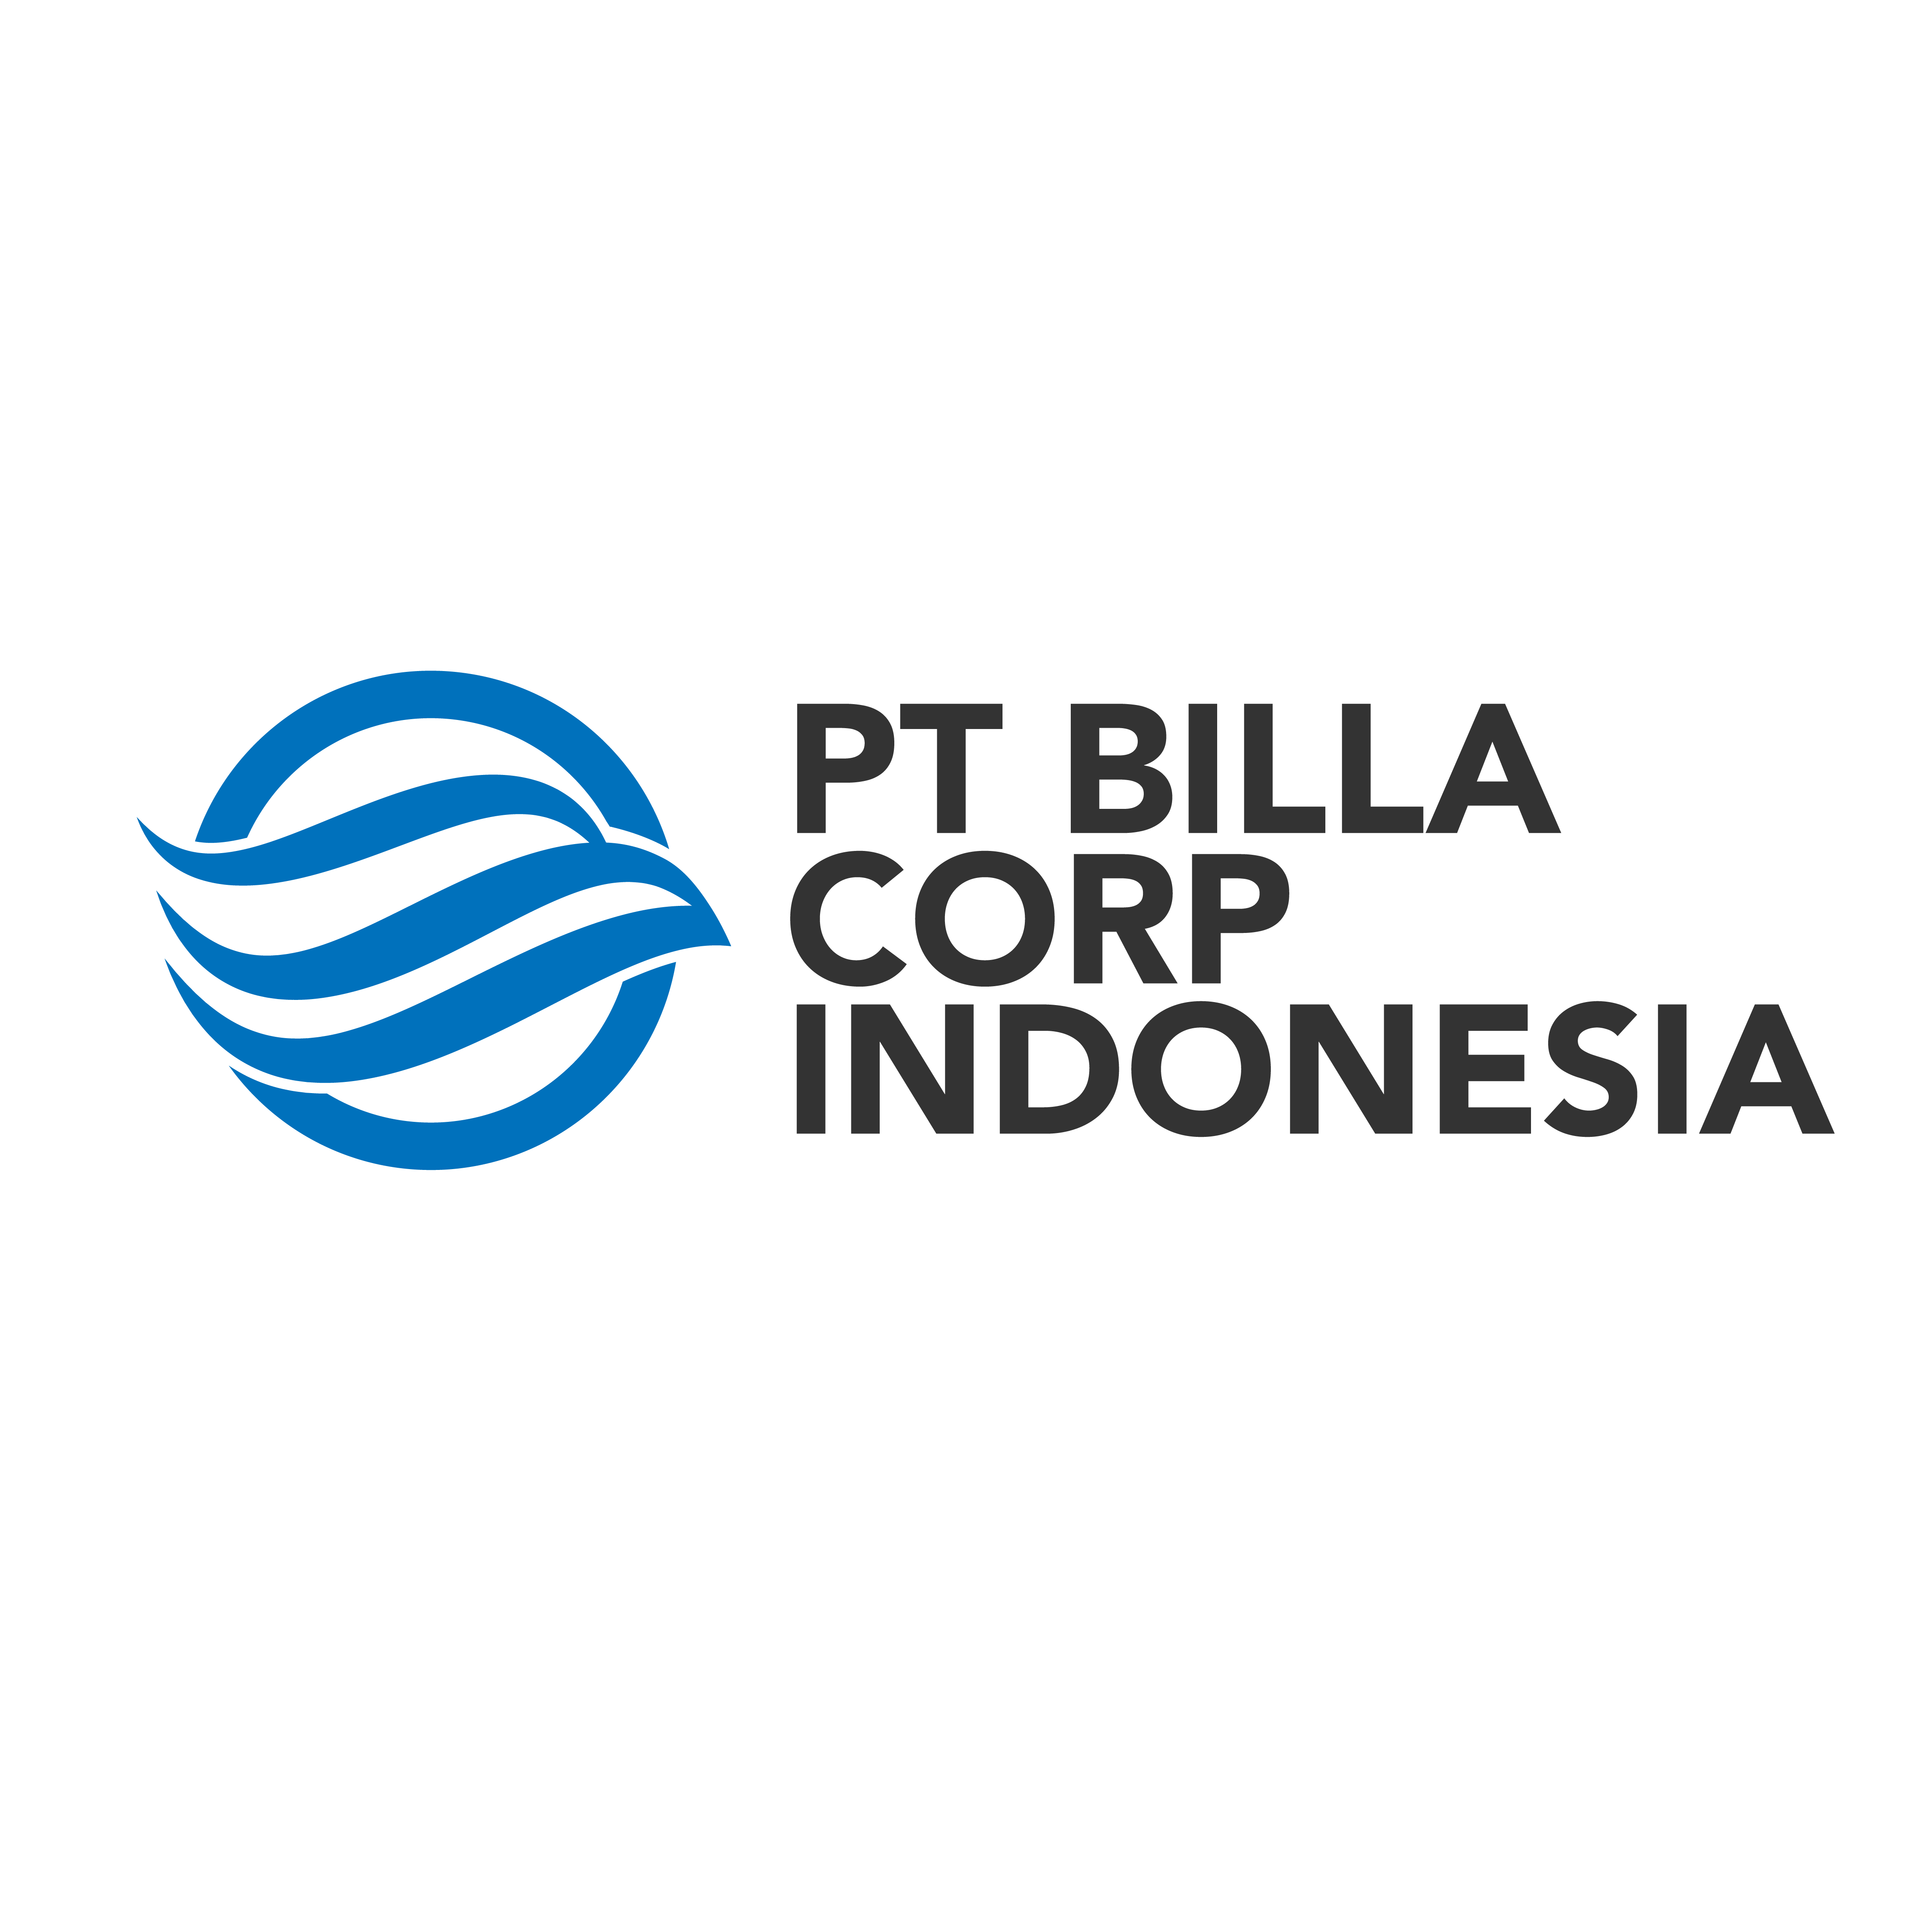 Pt Billa Corp Indonesia